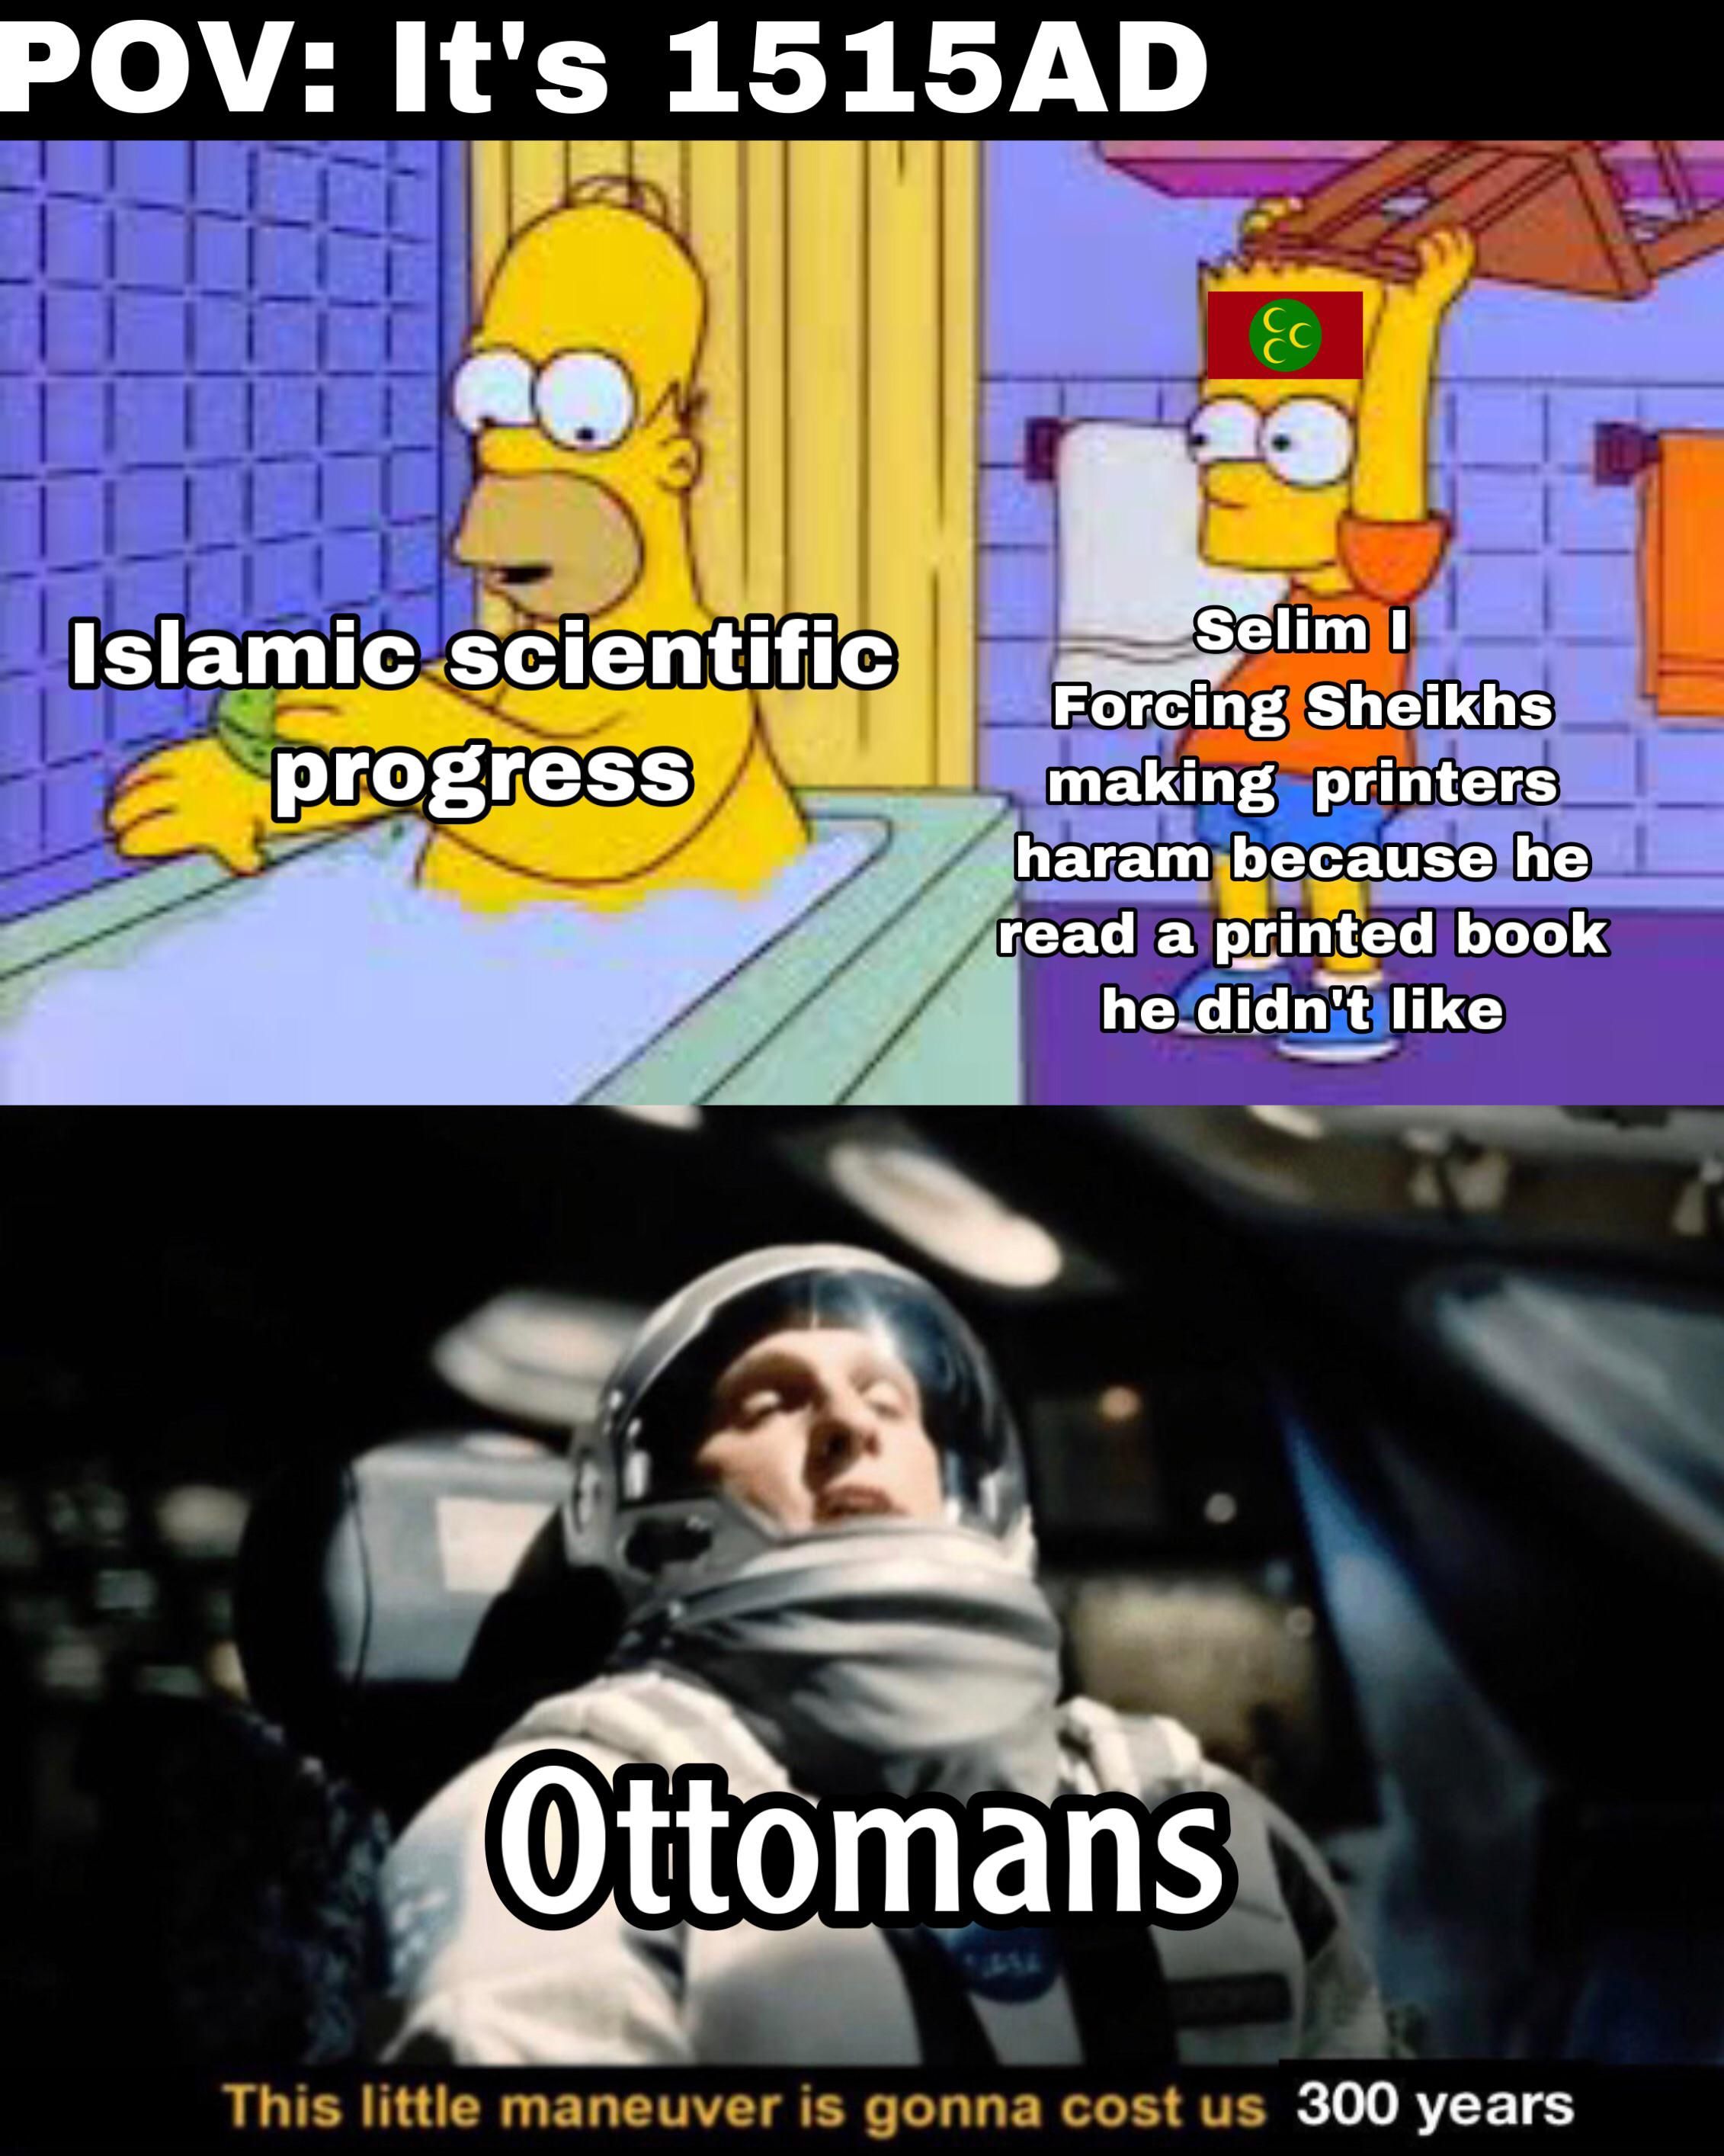 Thanks ottomans